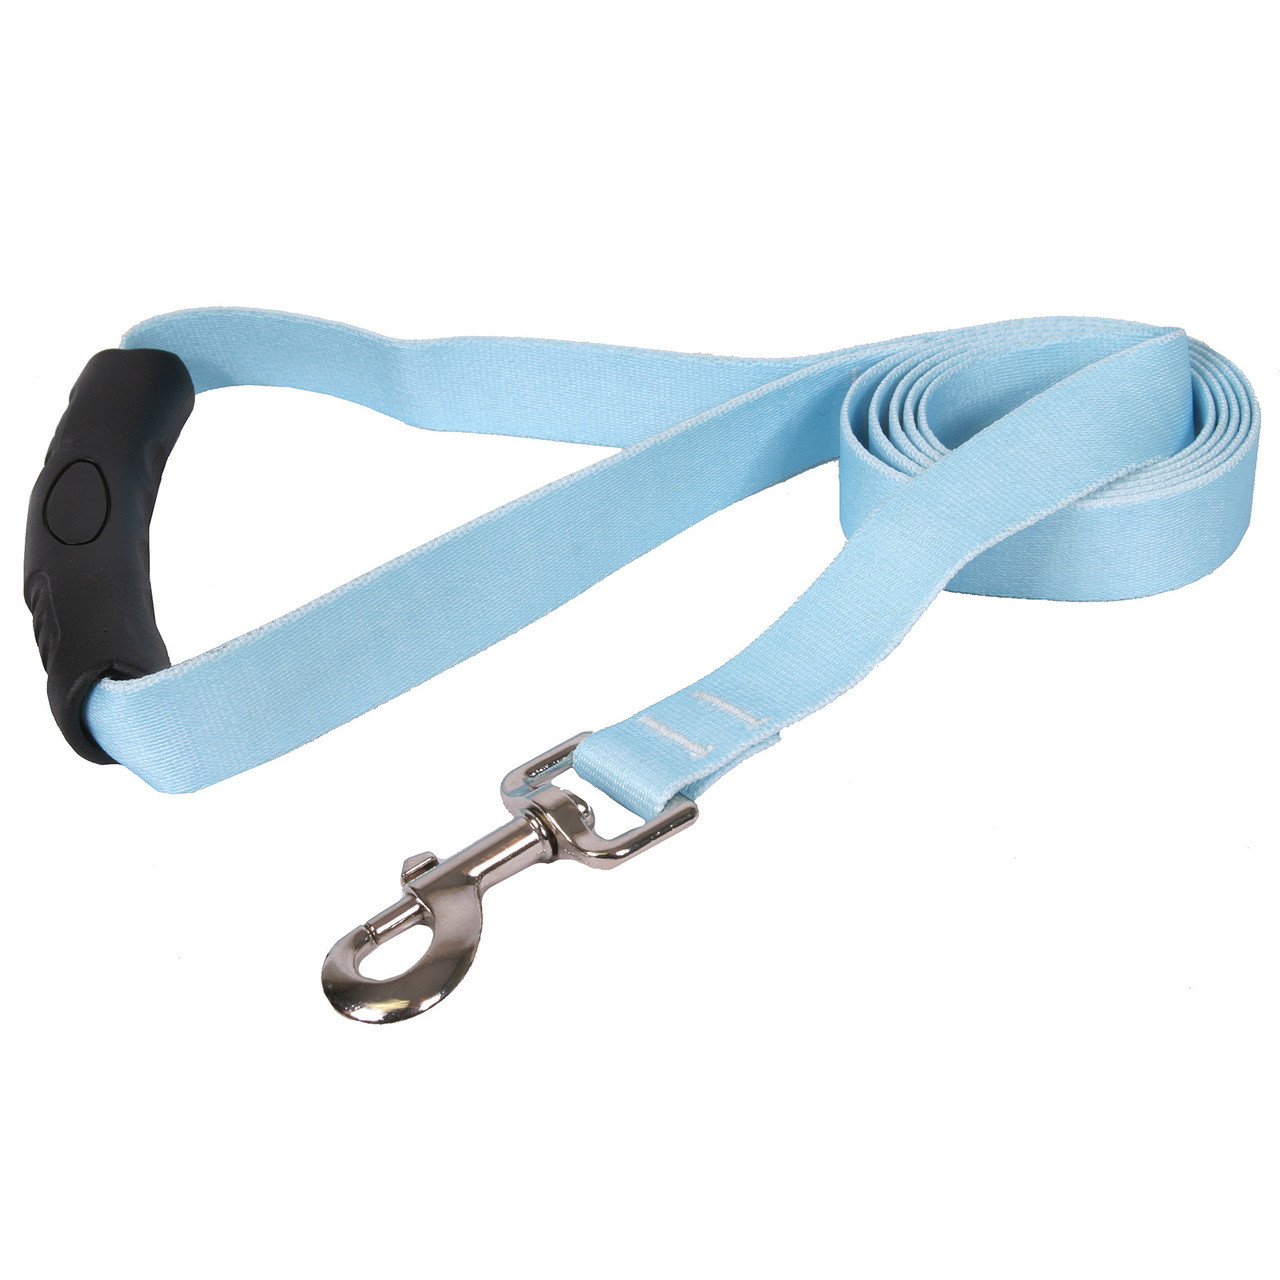 blue dog collar and leash